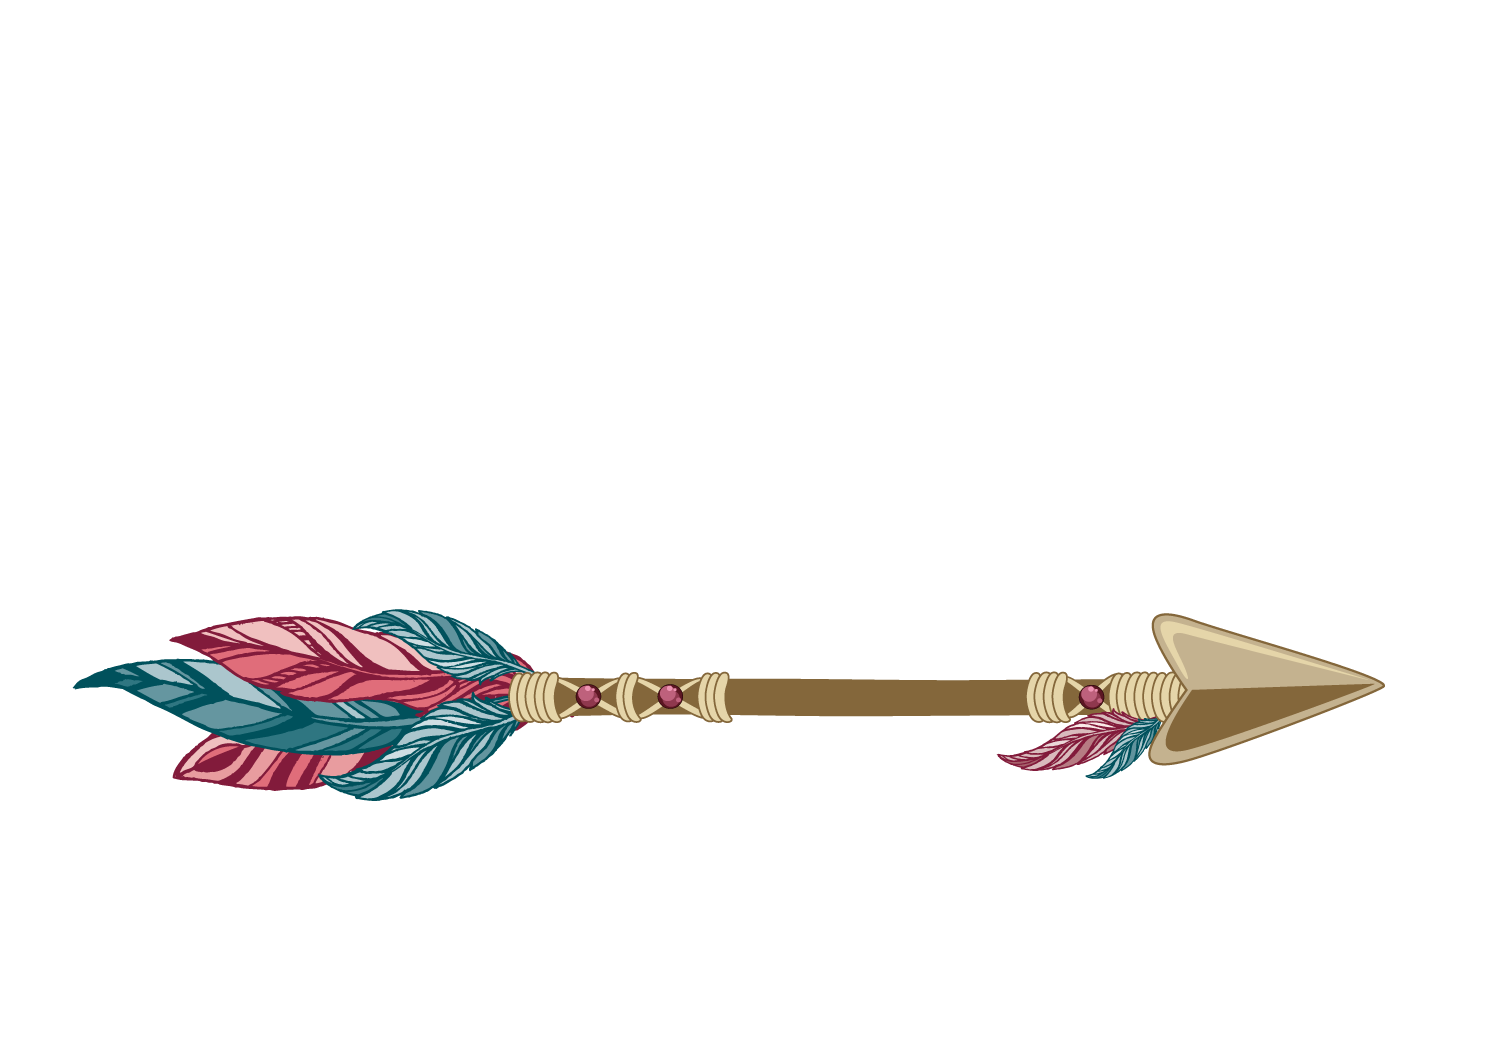 Raising Arrows Academy